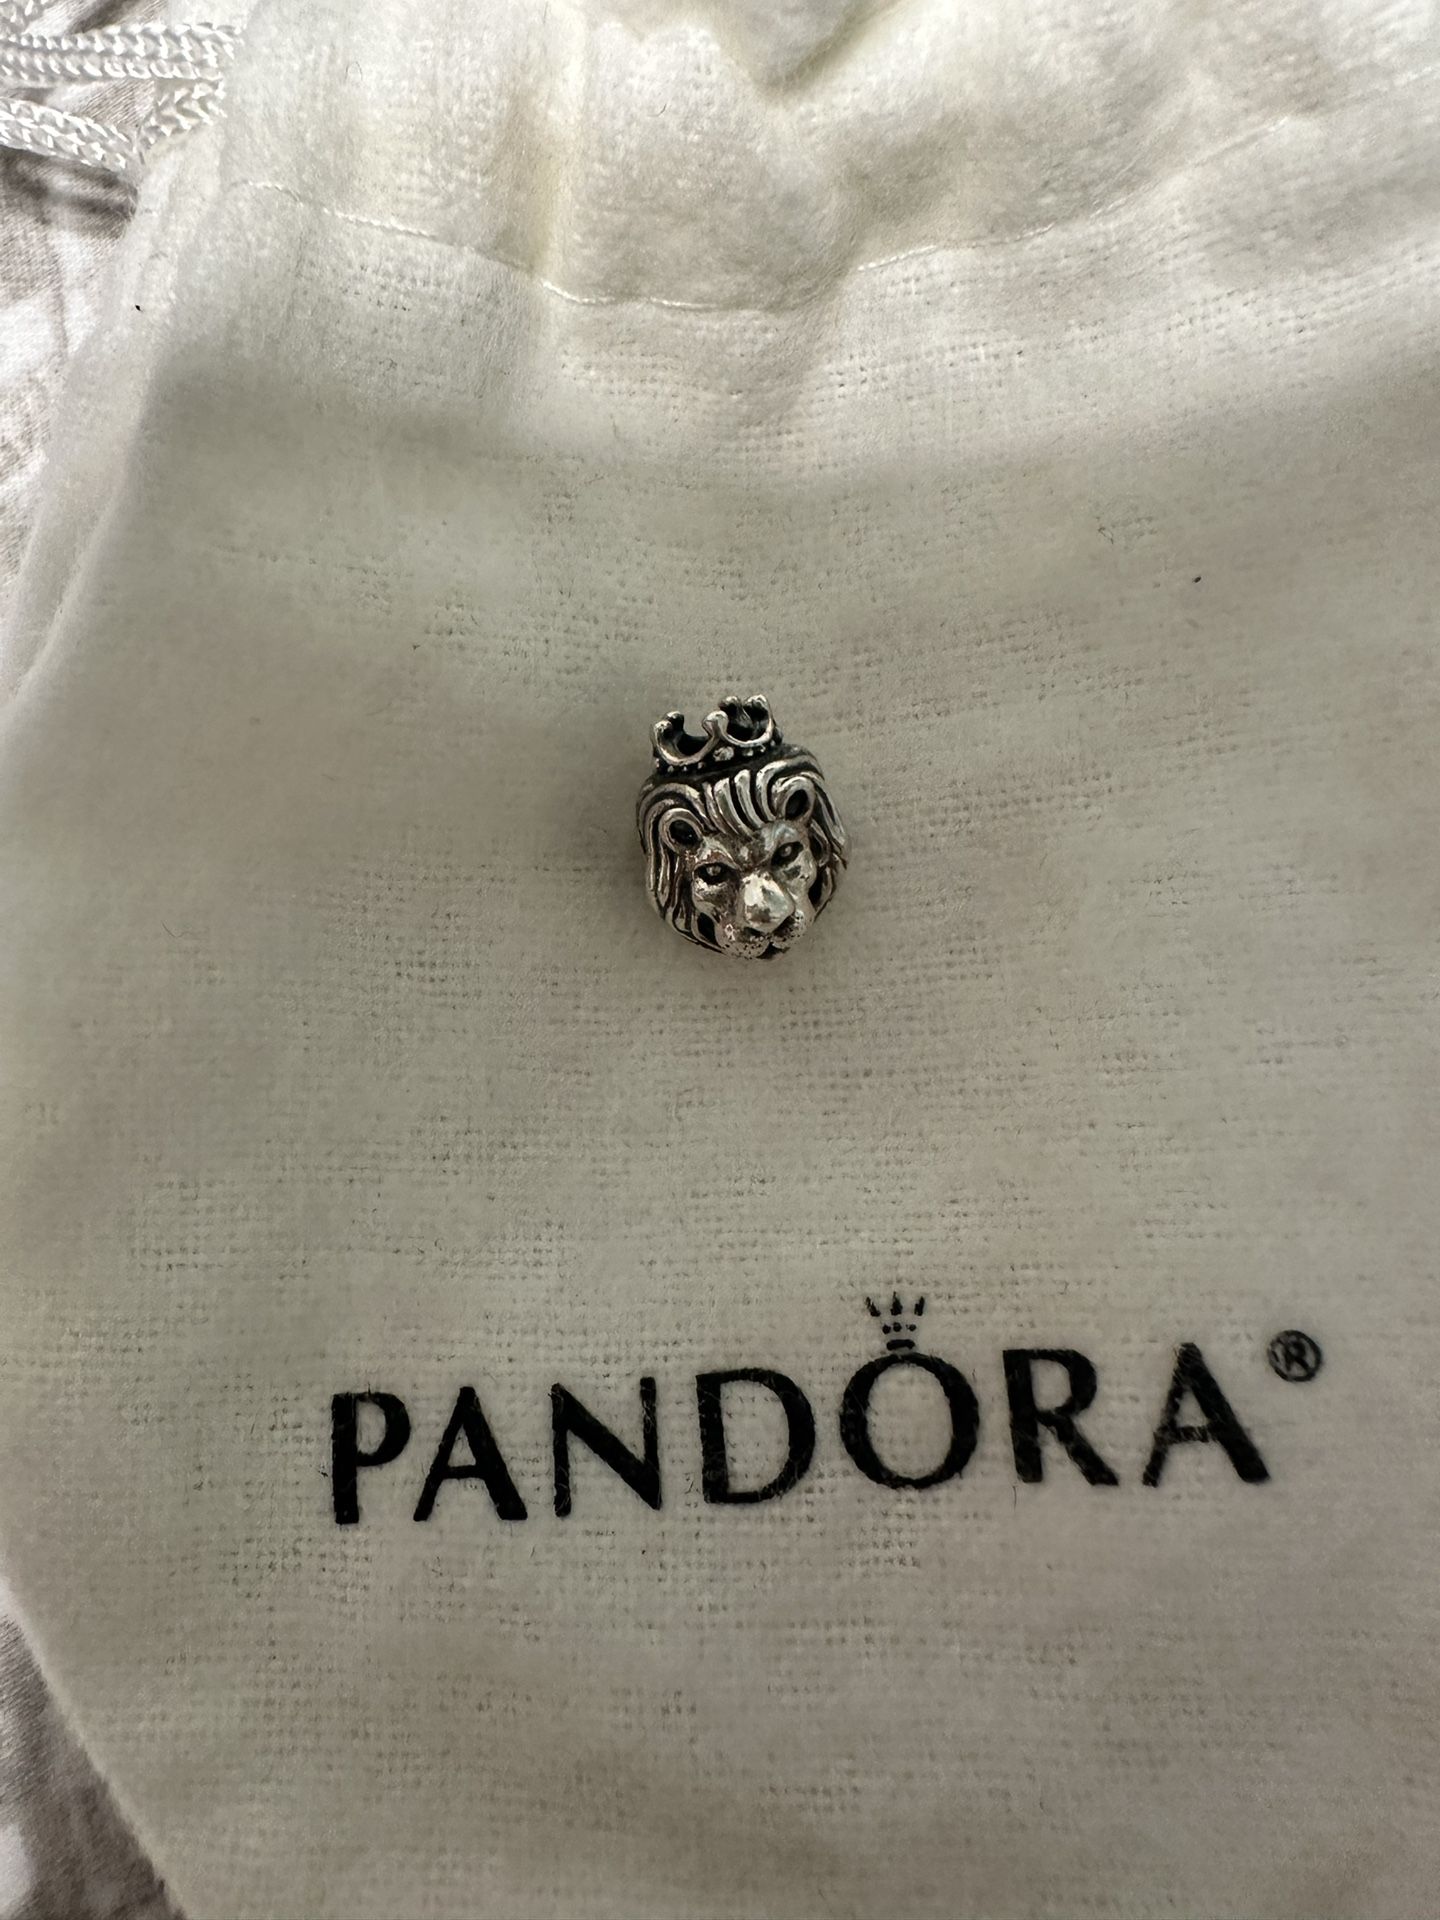 Pandora Lion Charm